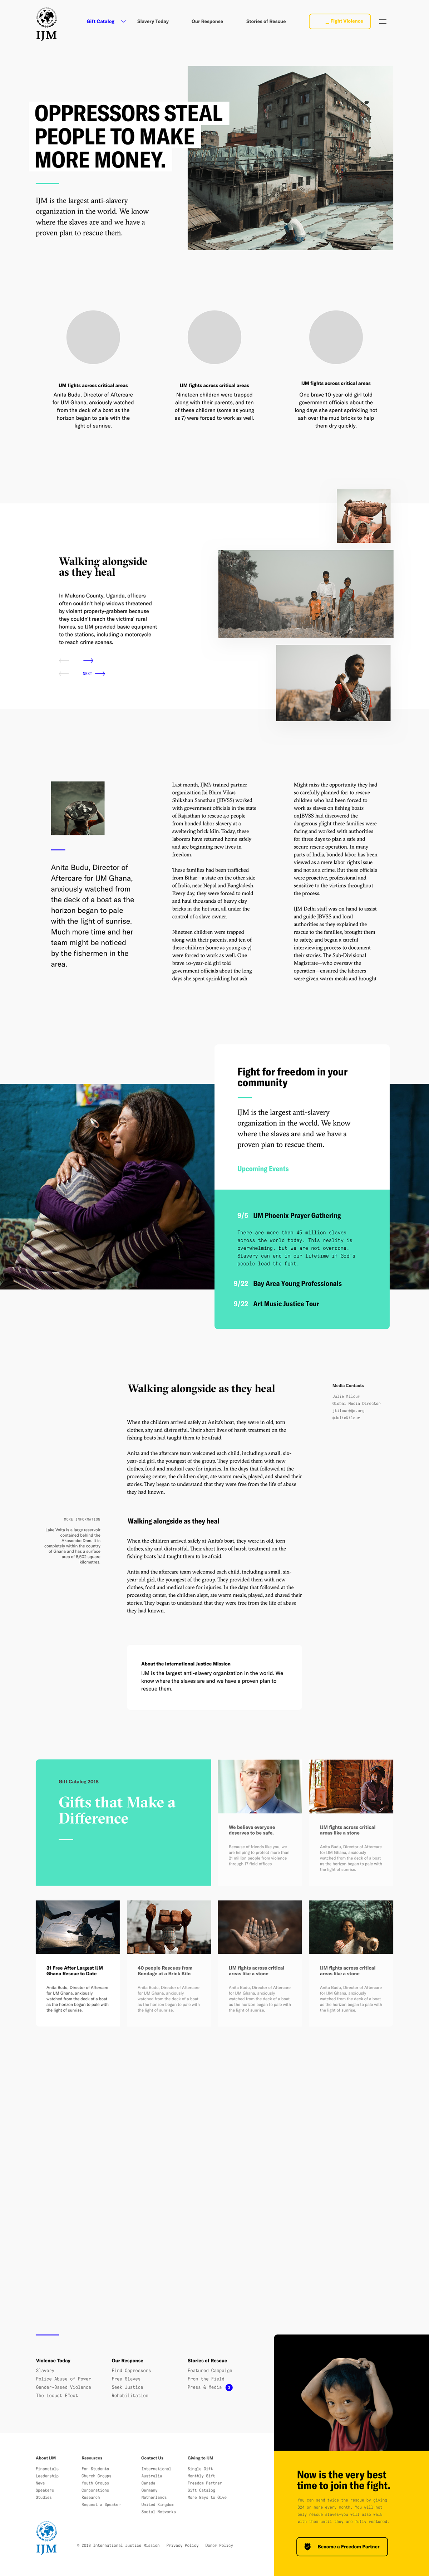 storytelling   Content Marketing interactive non-profit NGO Humanitarian